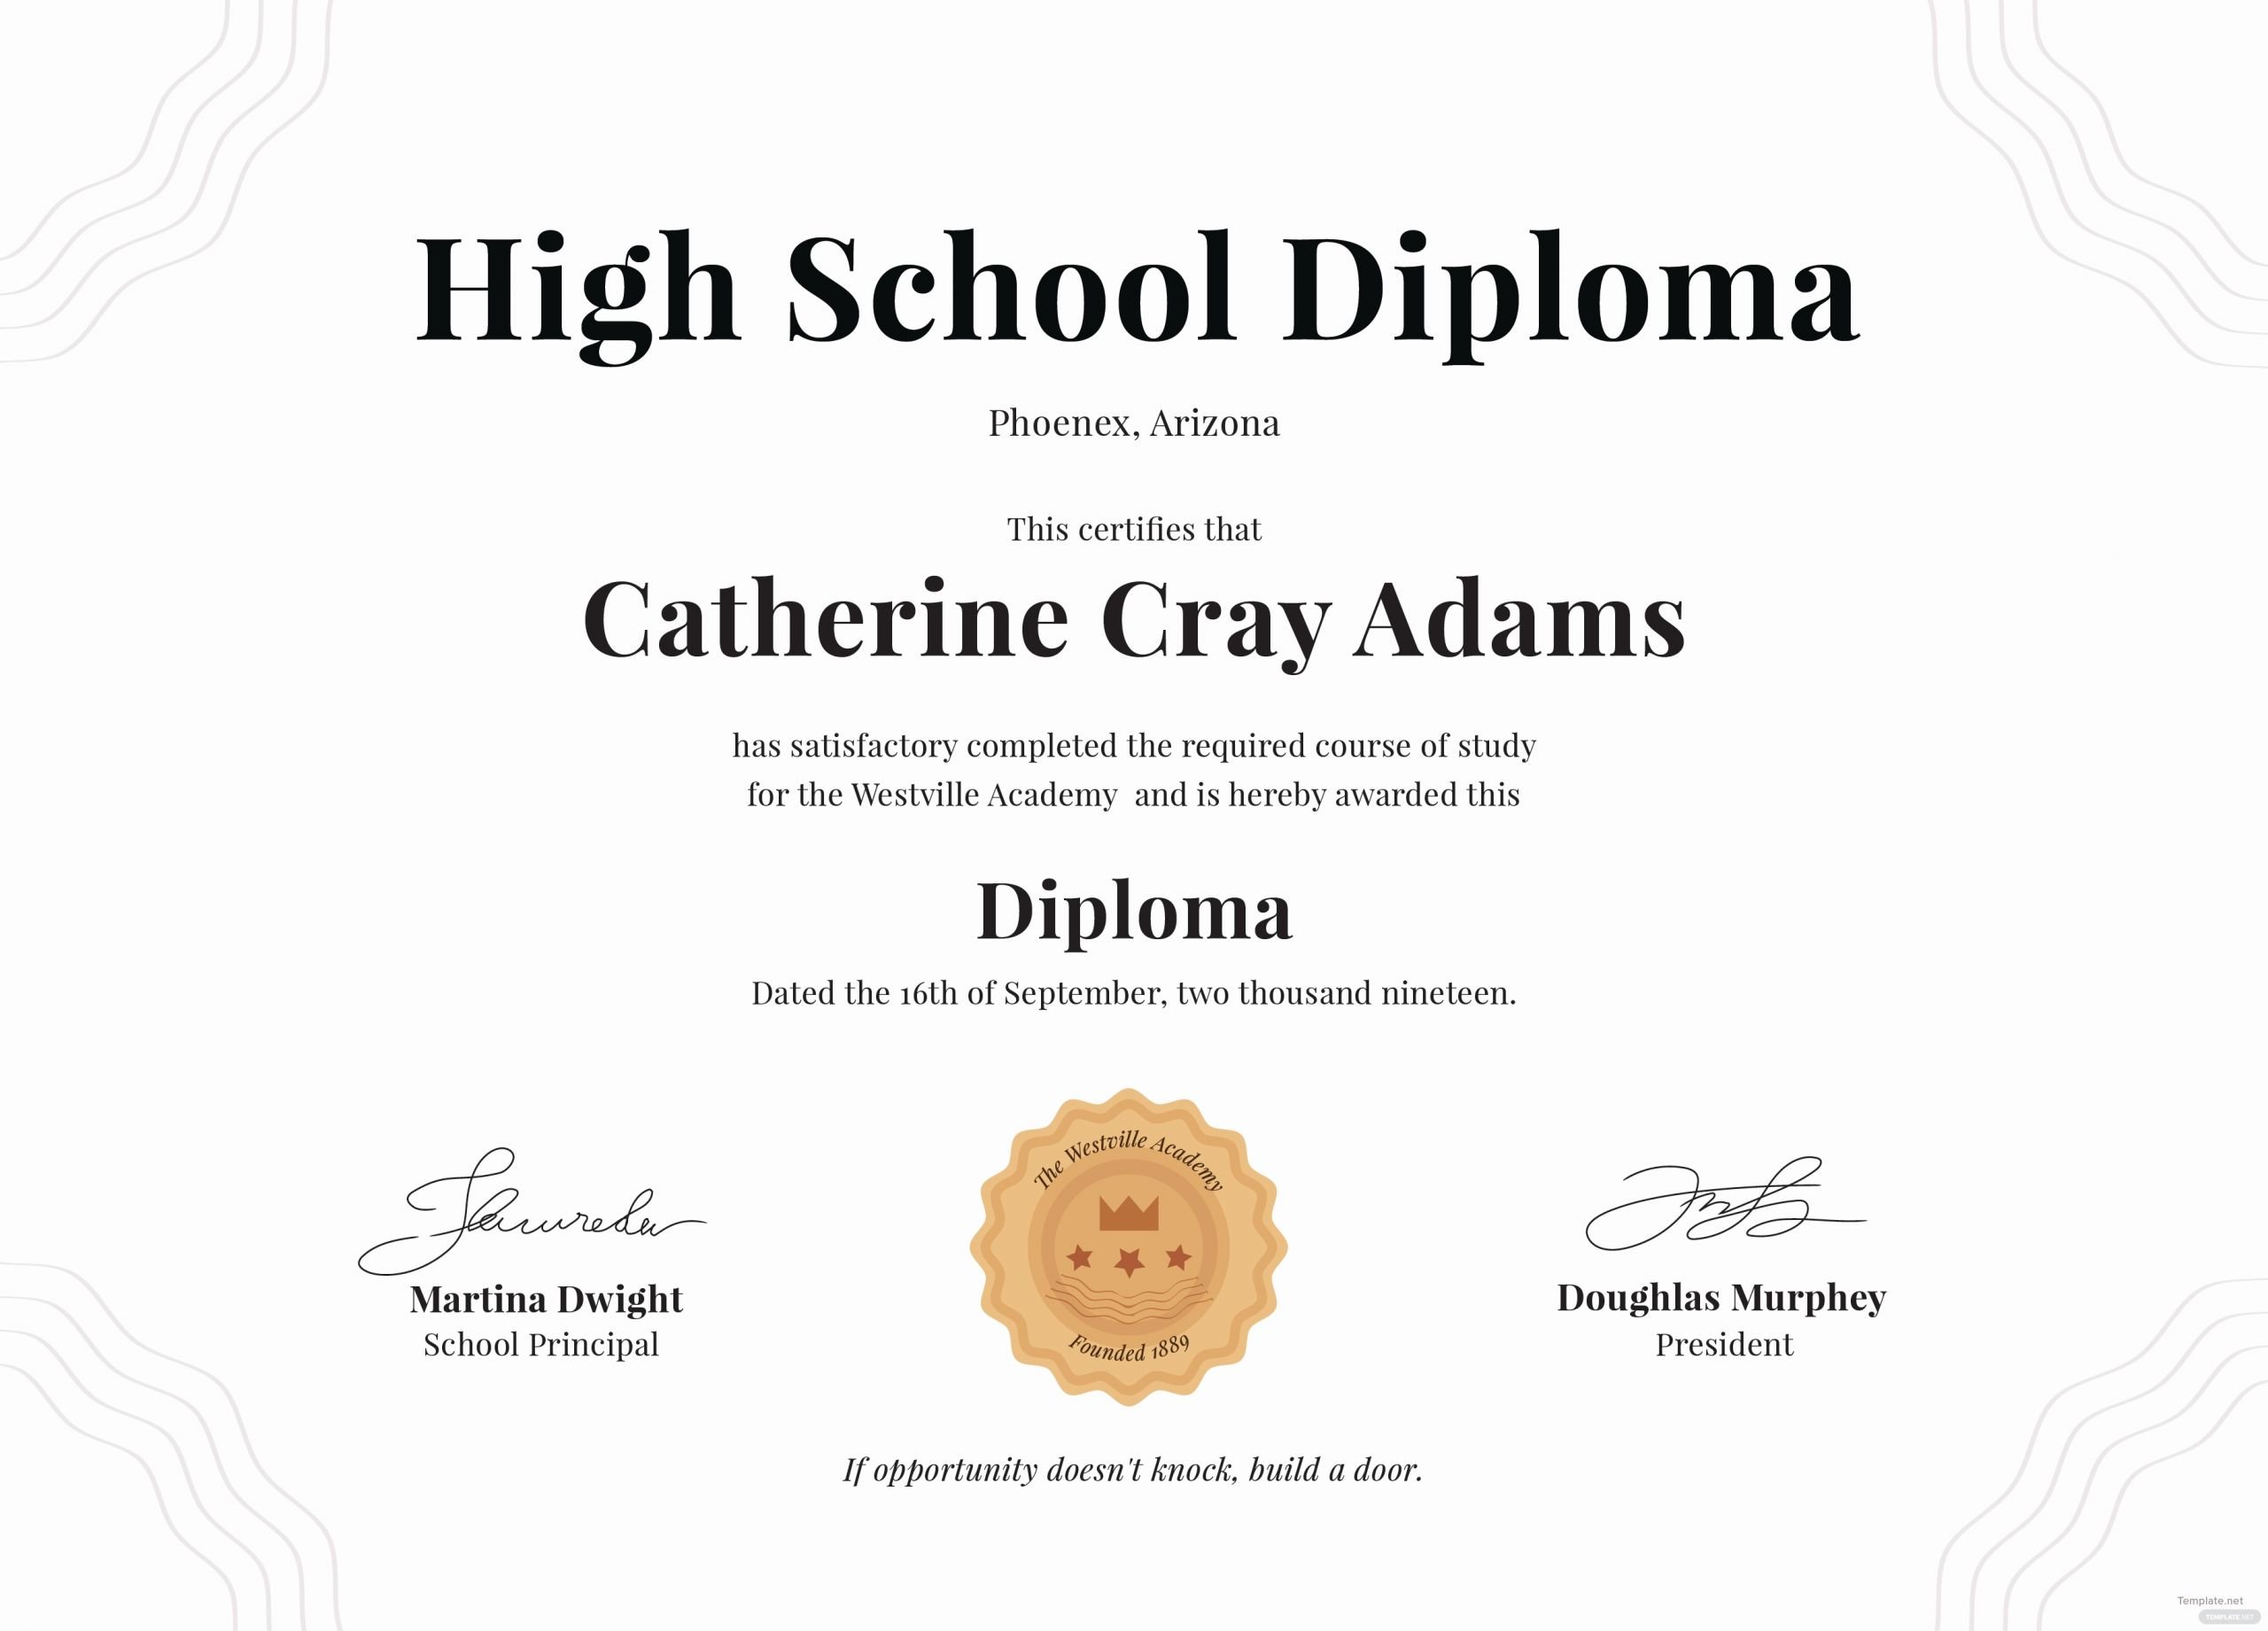 High School Certificate Template Inspirational Free High School Diploma Certificate Template In Adobe